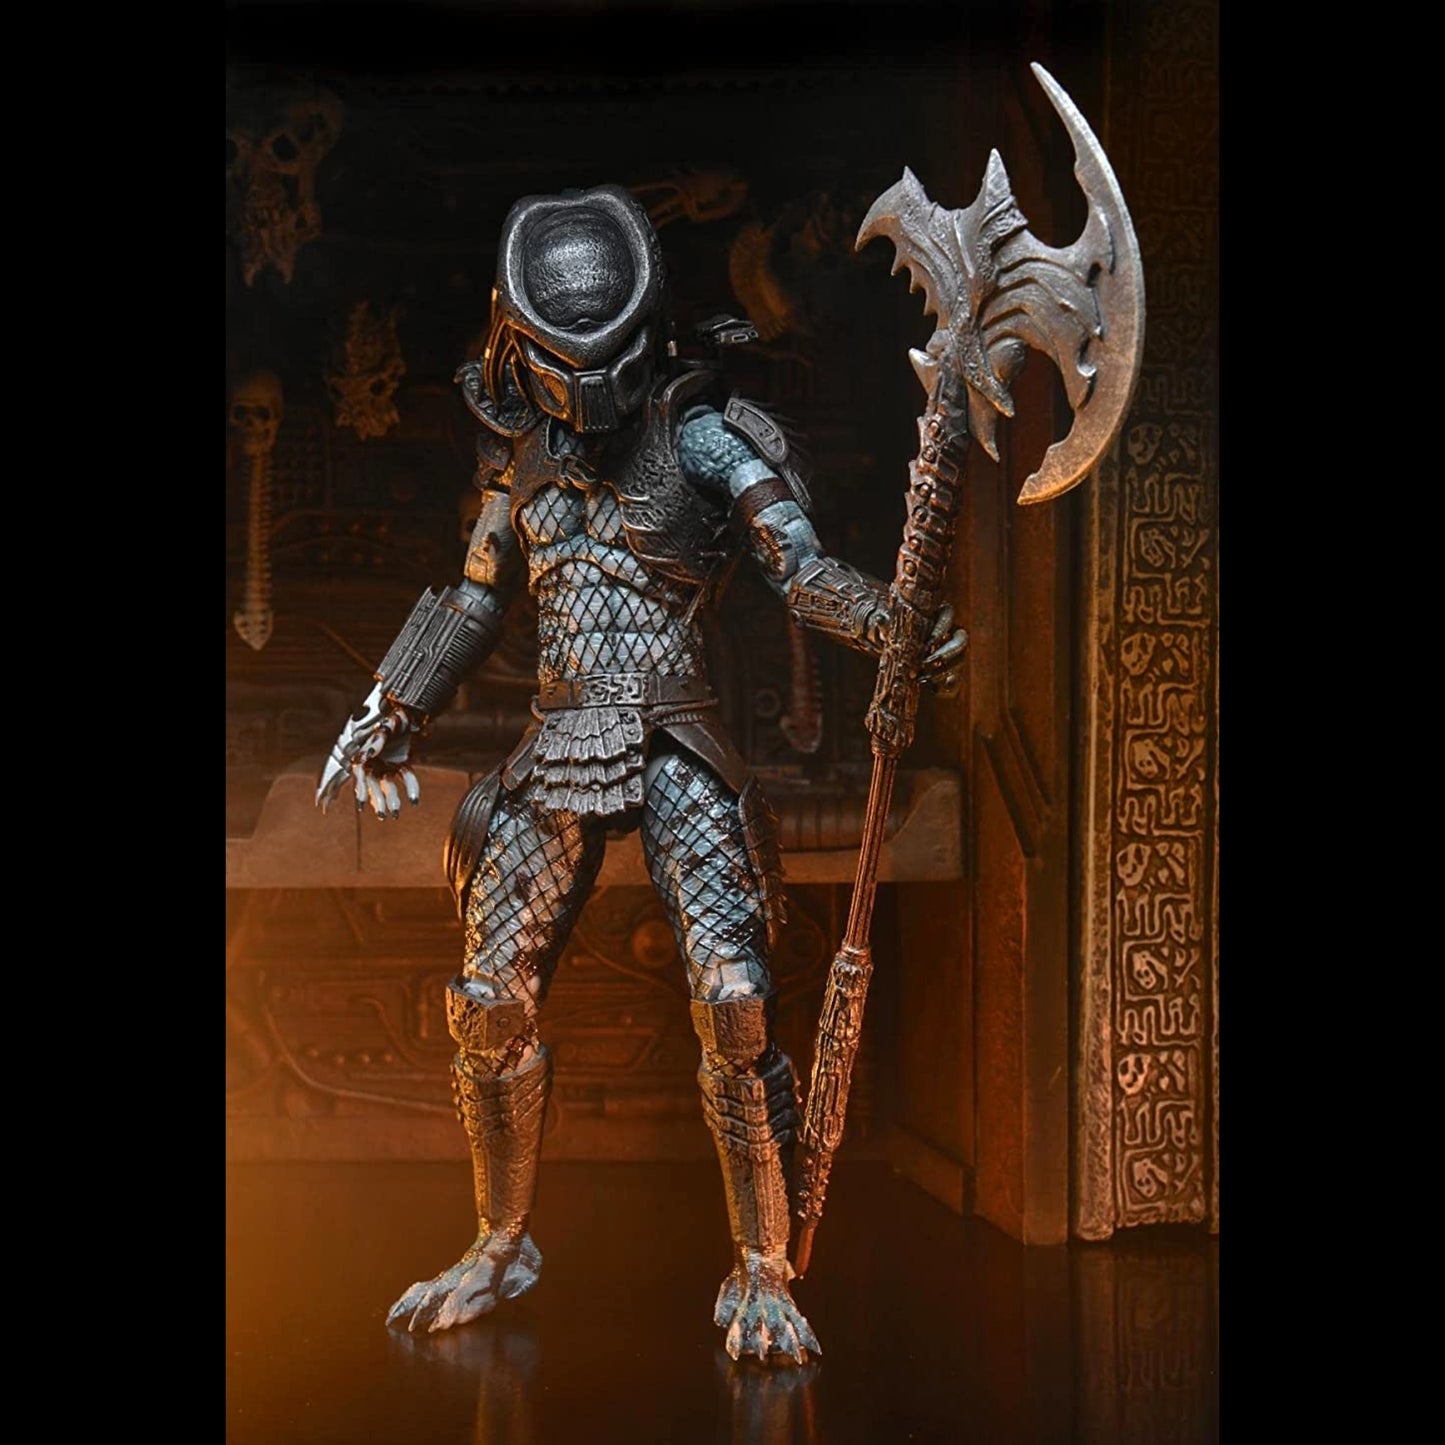 Warrior Predator (Predator 2) NECA Ultimate Edition Action Figure